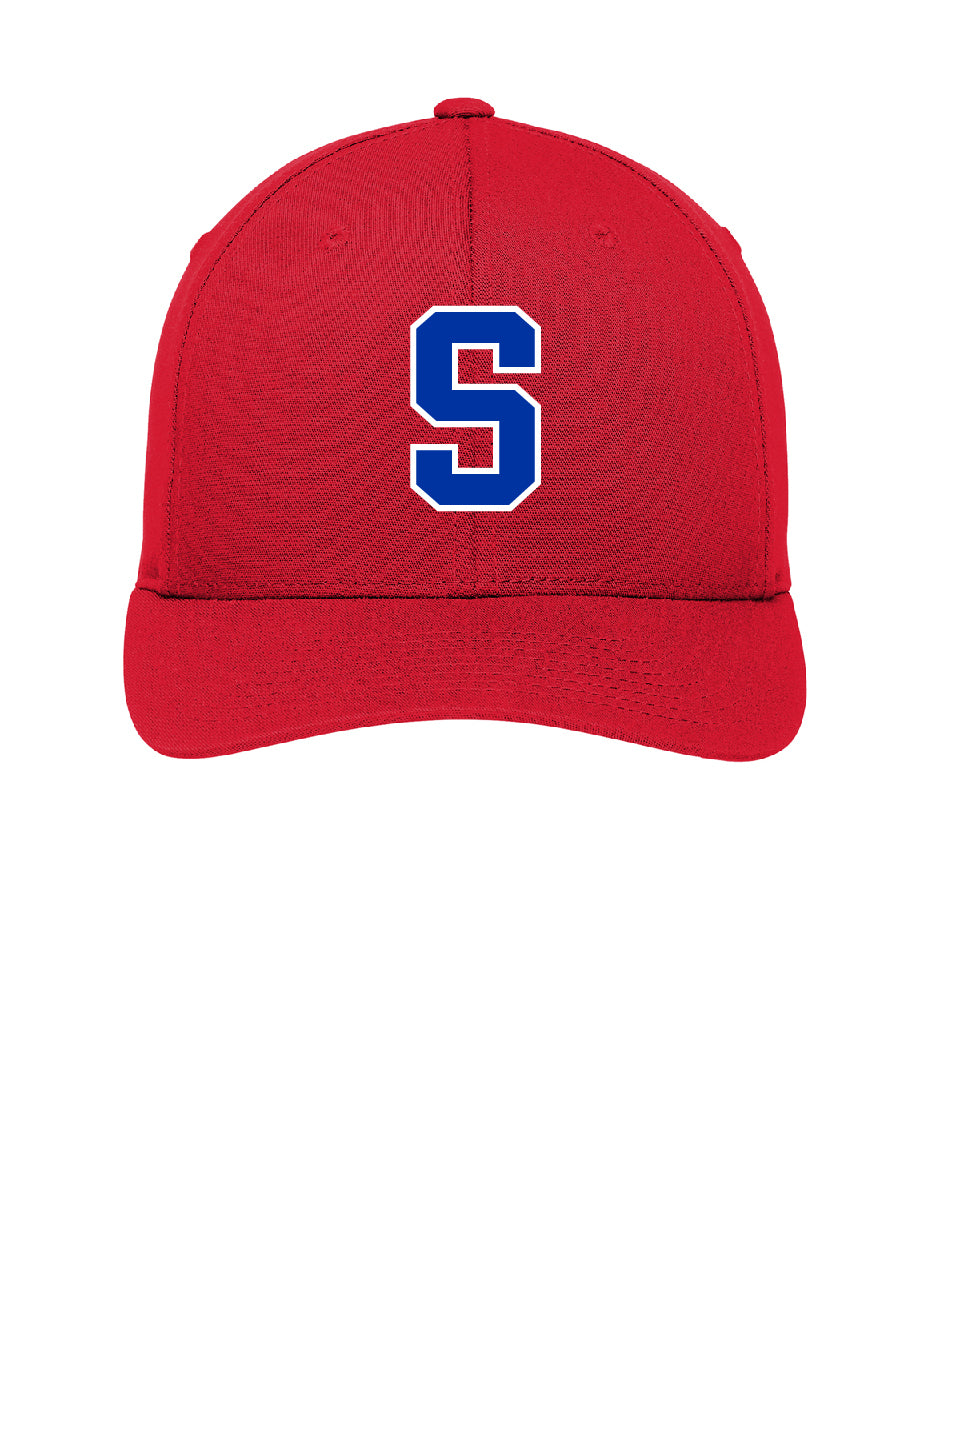 Spanaway Middle School Baseball Flexfit Cotton Twill Hat